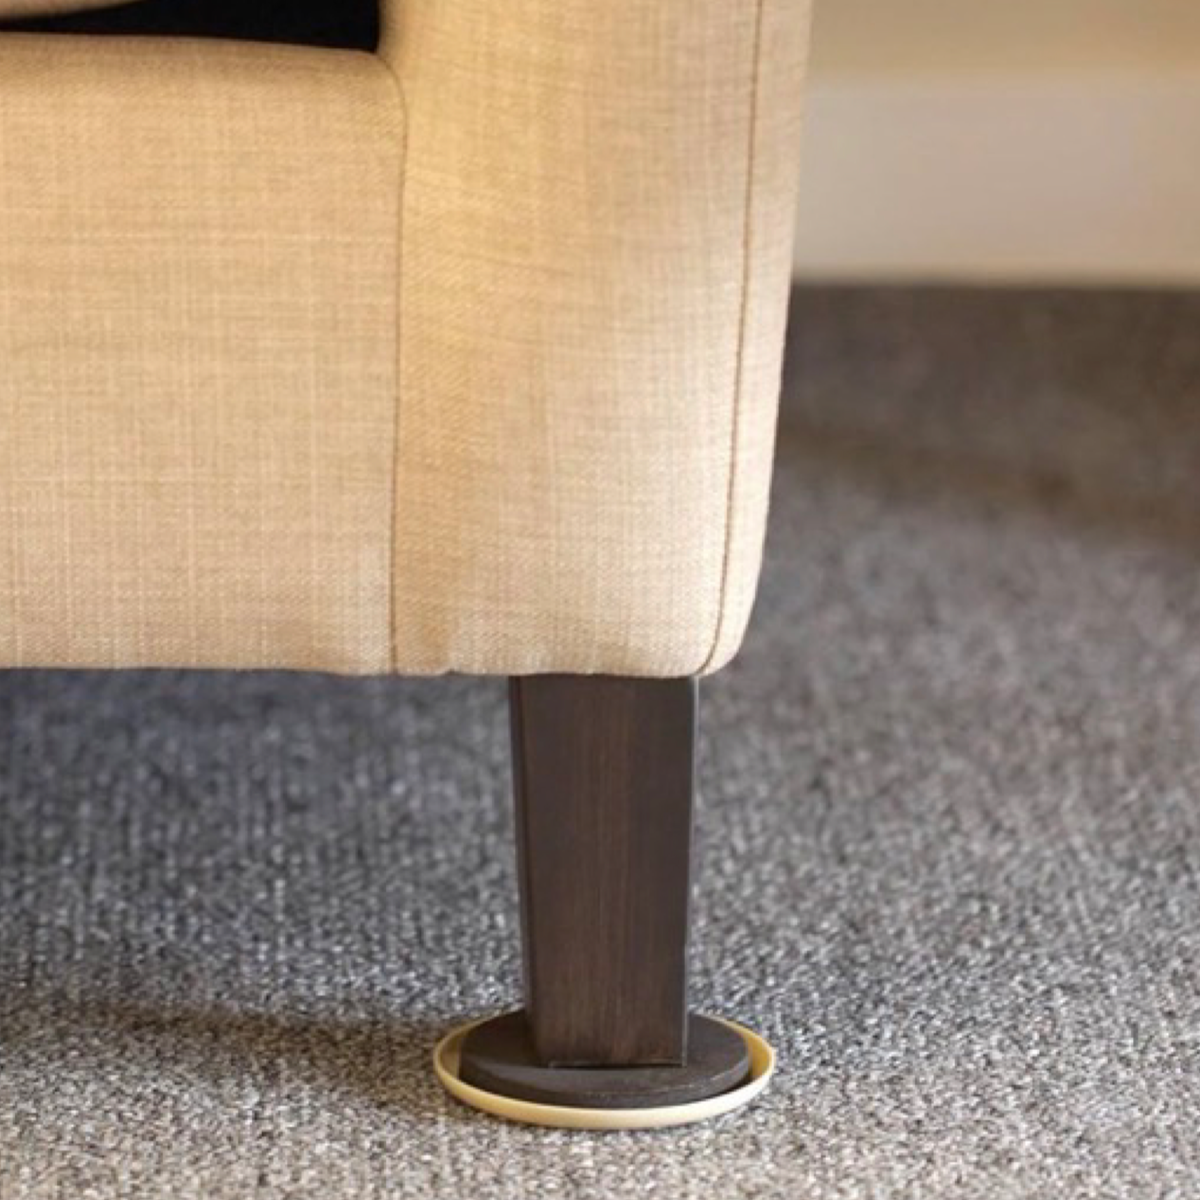 Duck Brand 4pk Of 3.5"  Furniture Sliders - For Easy Use On Carpet